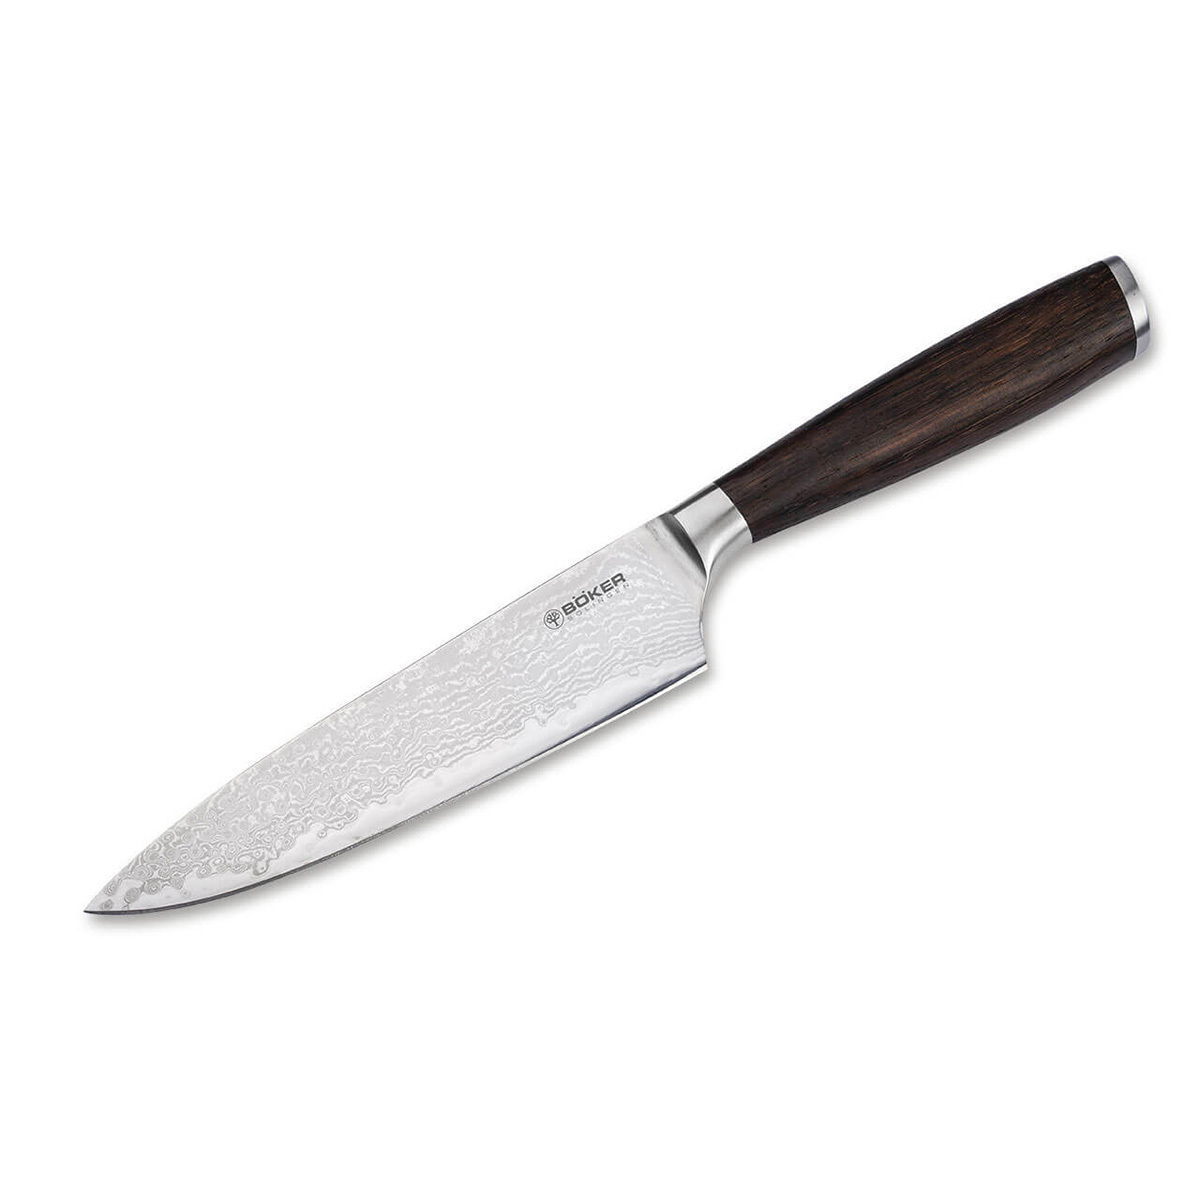 Поварской кухонный шеф нож Boker Meisterklinge Damast Chef's Knife Small, сталь дамаск, рукоять дуб